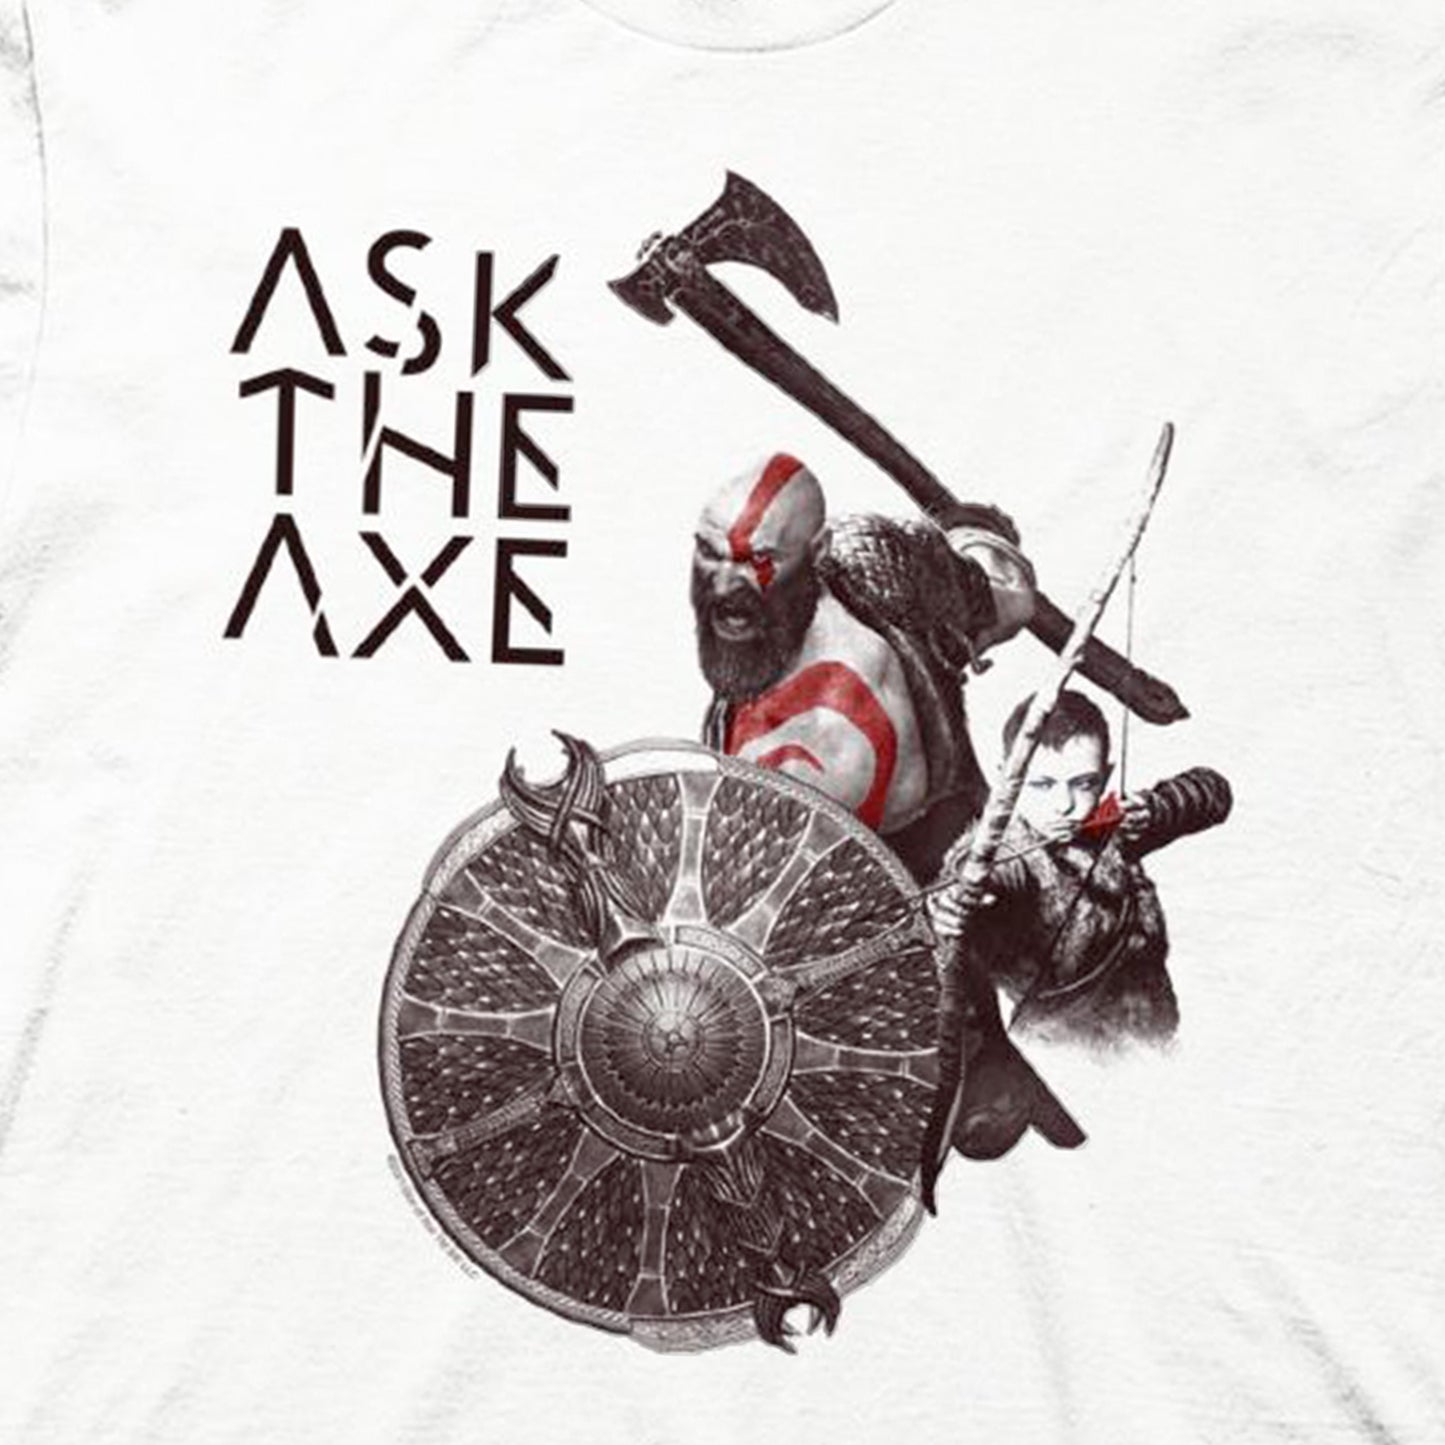 Kratos & Atreus "Ask The Axe" (God of War) White Unisex Shirt